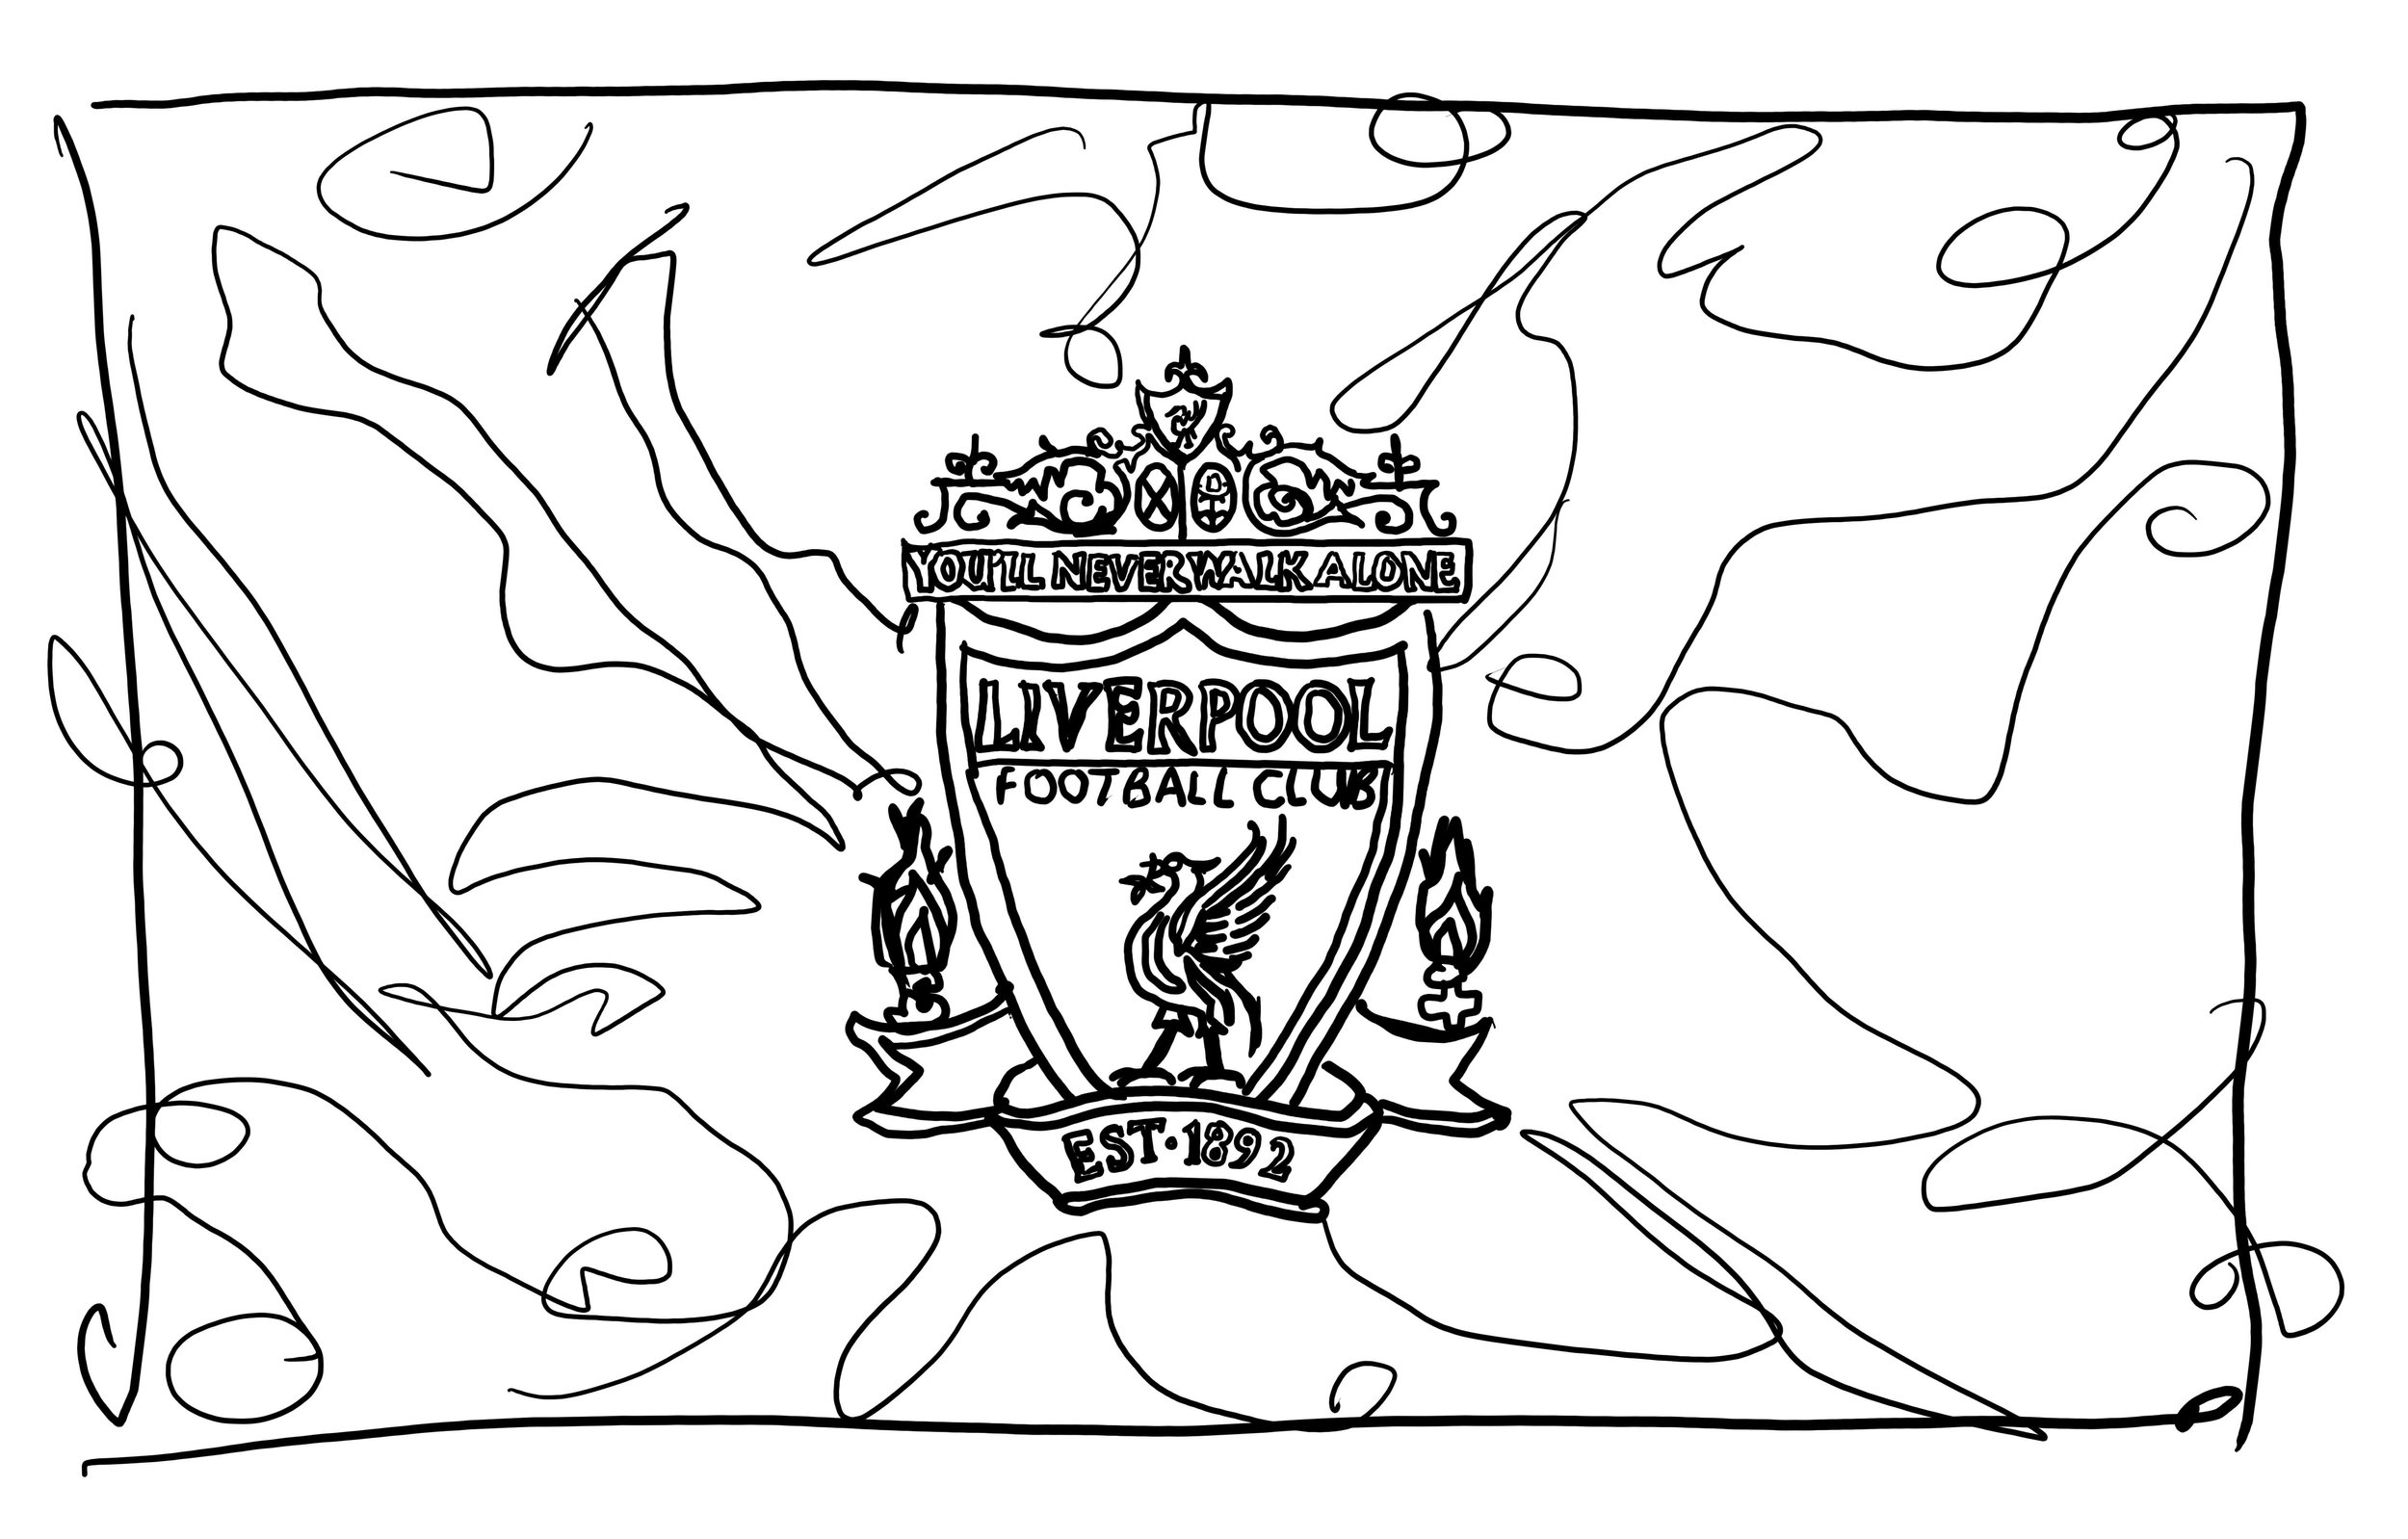 love-liverpool-resources-1_0006_flag sketch.jpg